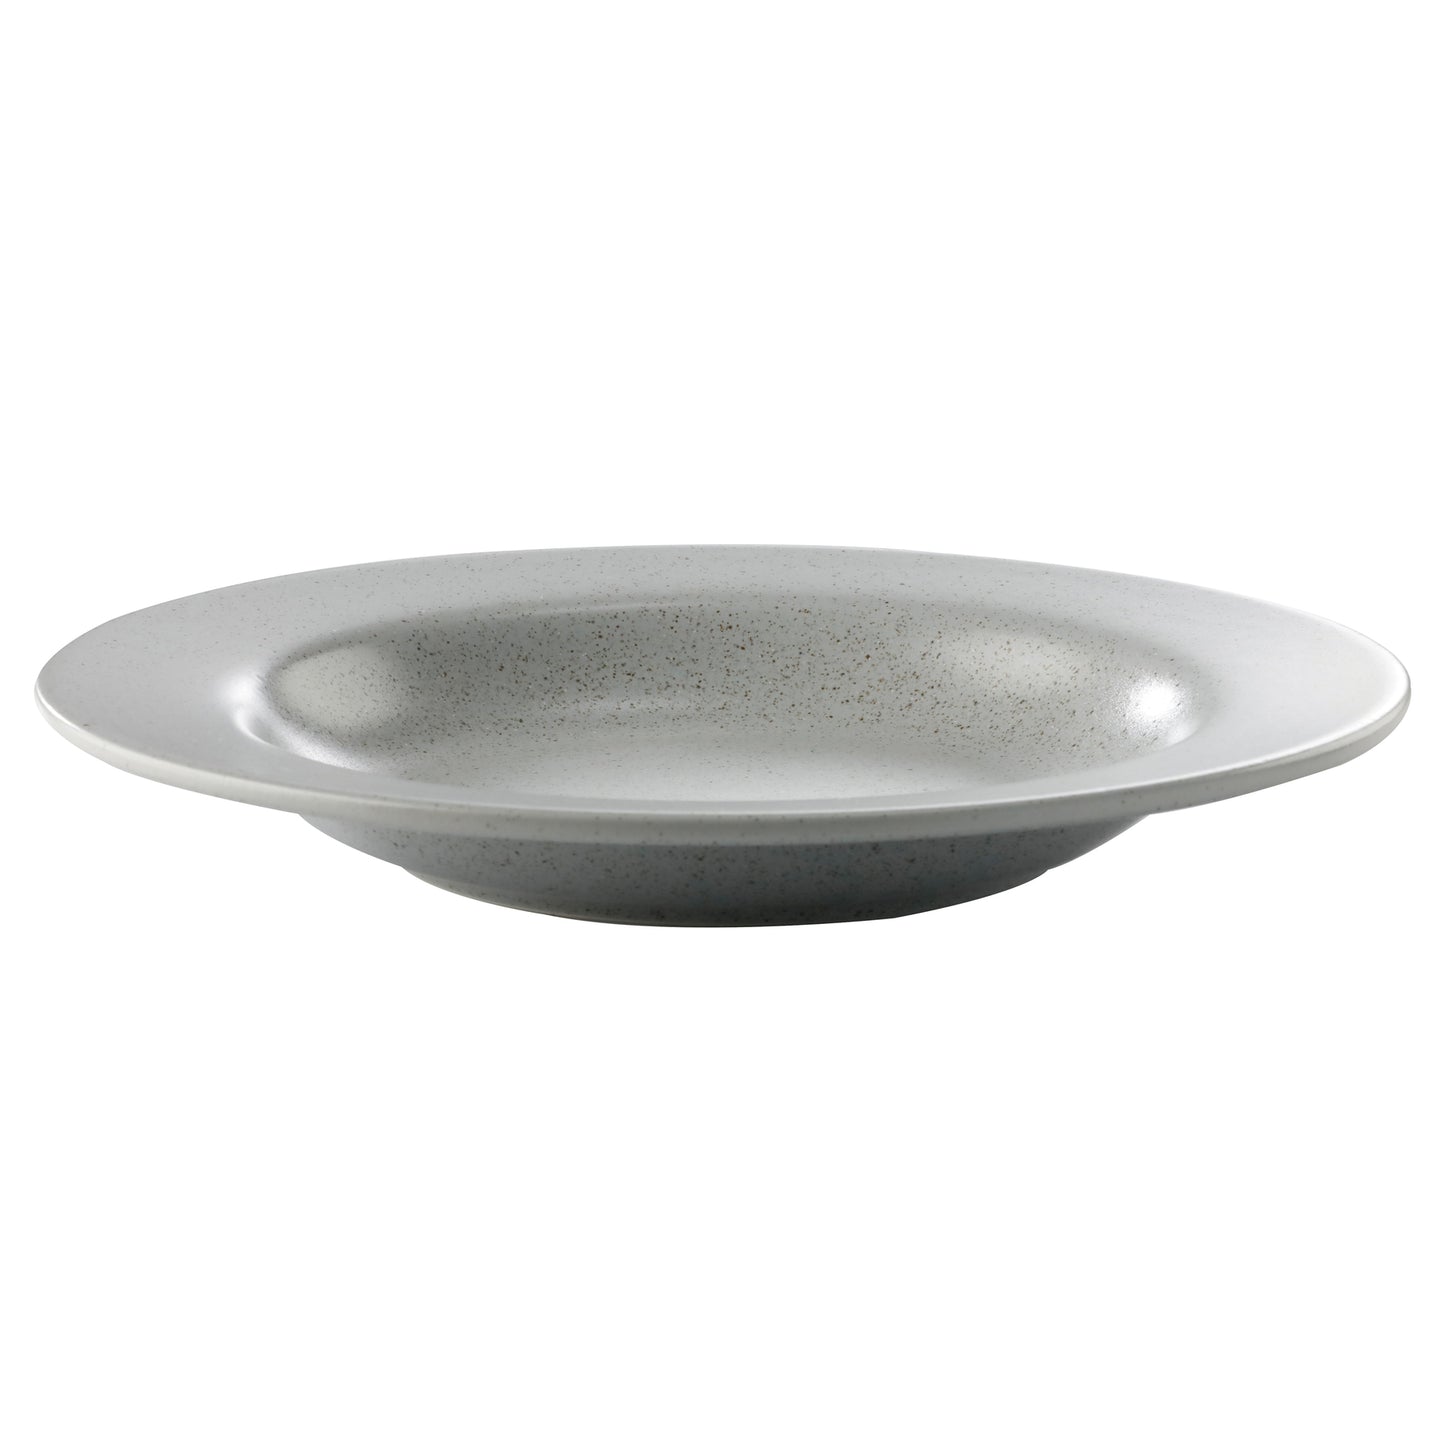 18.2 oz. Speckled Grey Reactive Glaze Porcelain Rimmed Bowl, 9 3/4"Dia., Corona Cosmos Moon (Stocked) (12 Pack)